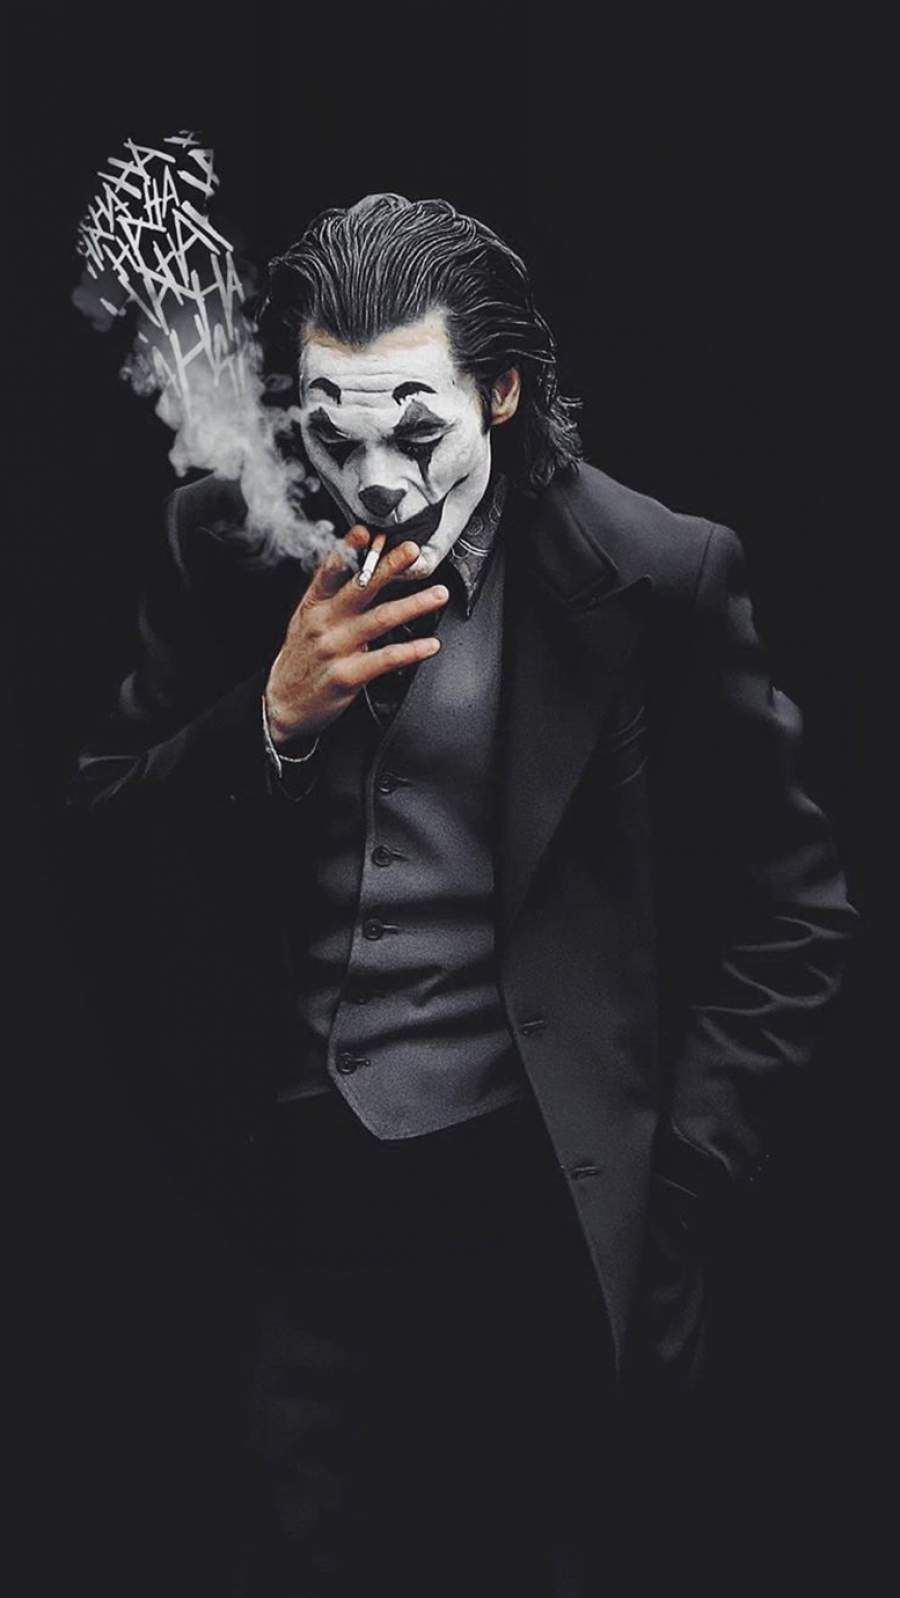 Joker Smoke Laugh IPhone Wallpaper. Joker iphone